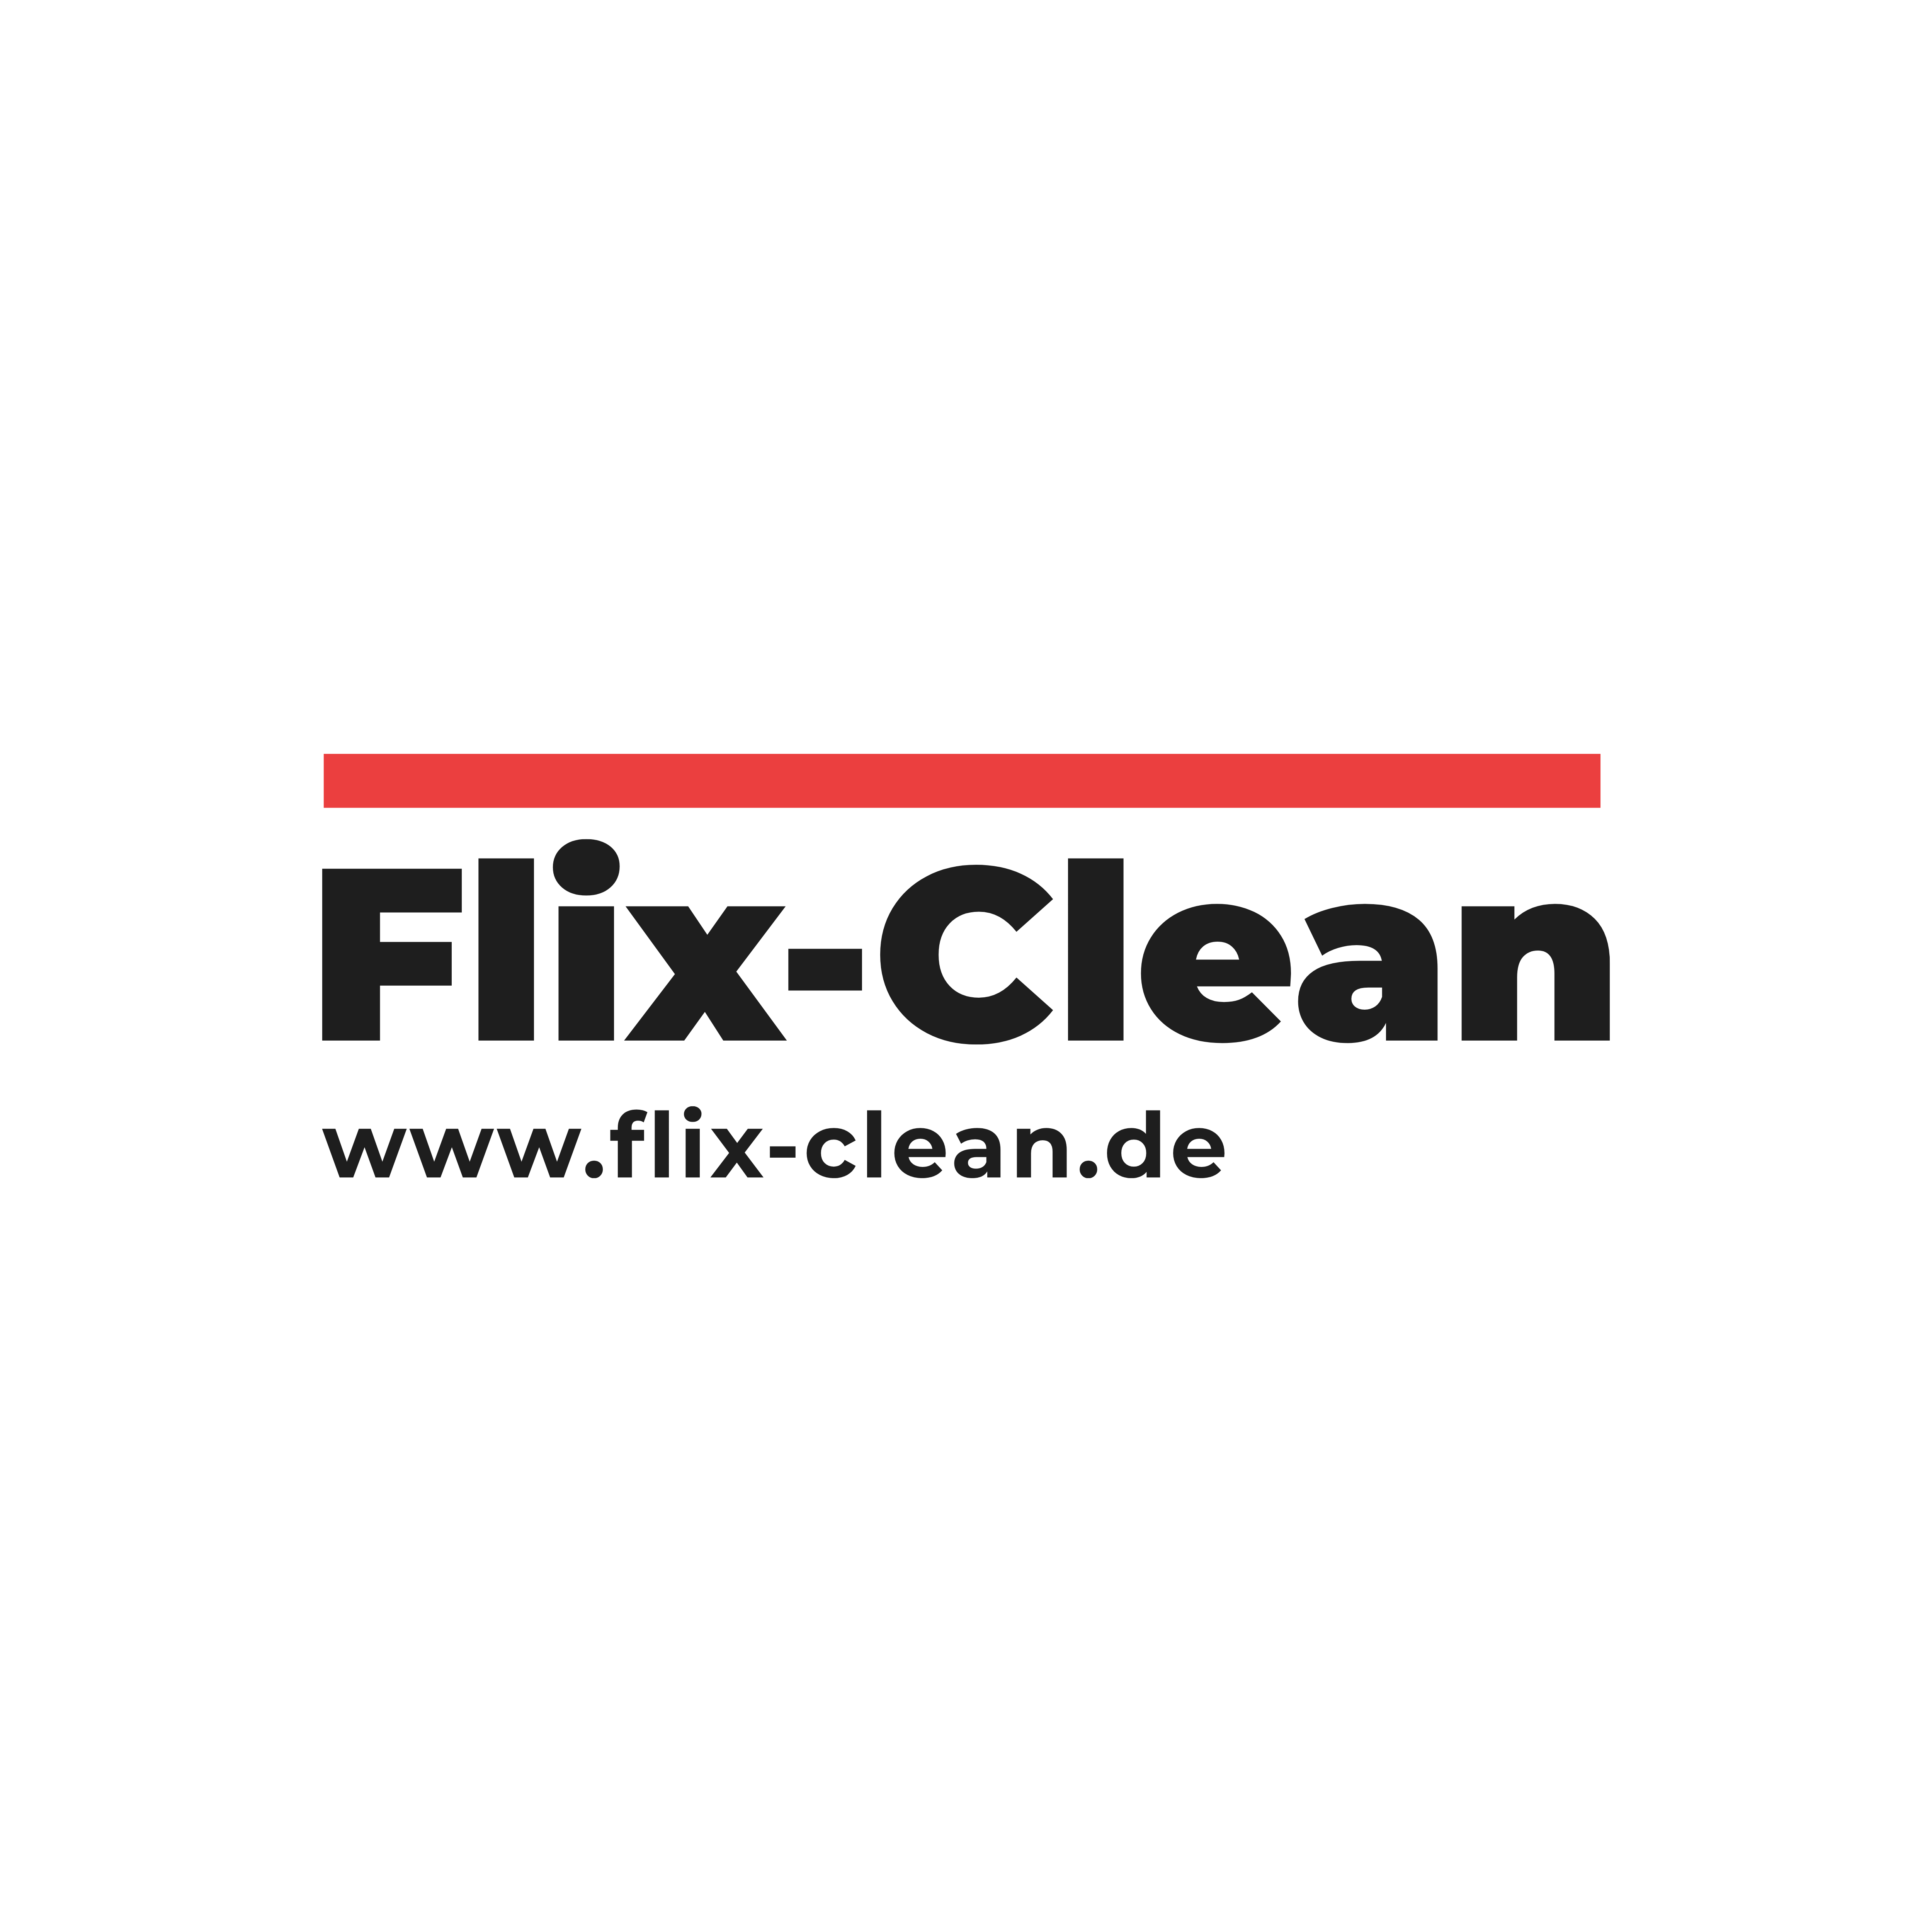 (c) Flix-clean.de